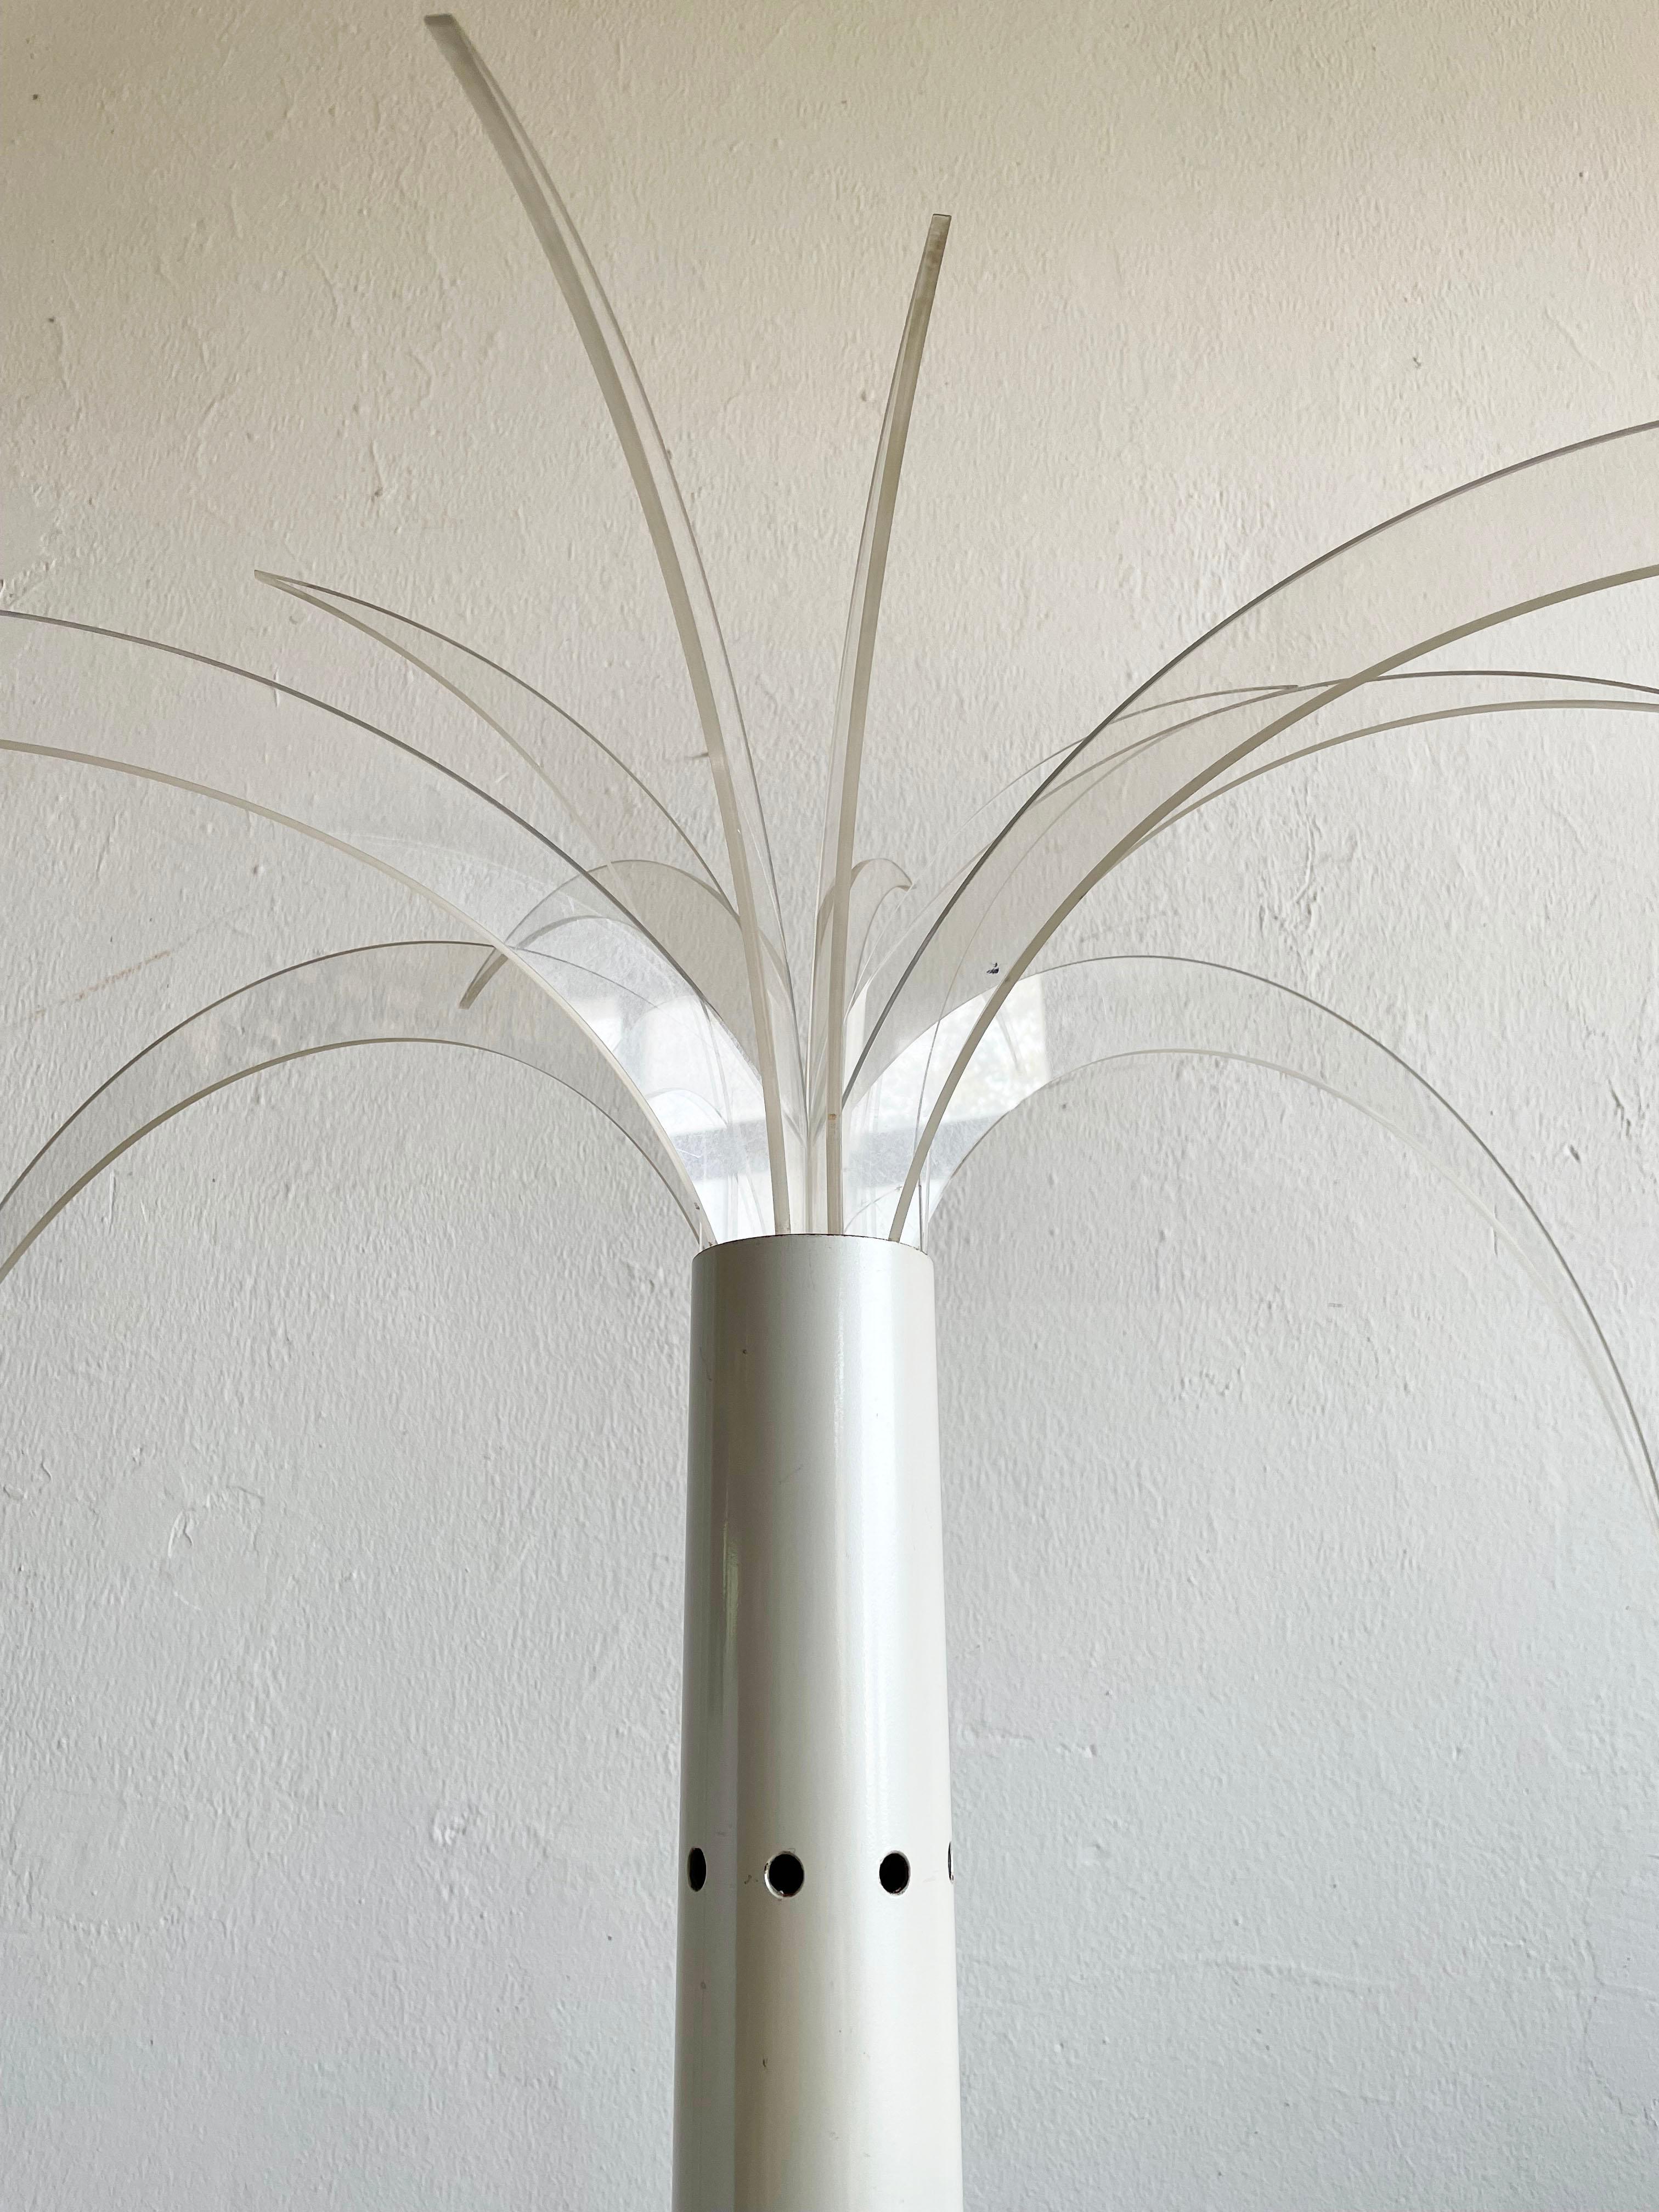 Post-Modern SANREMO Floor lamp designed by Archizoom Associati in 1968 for Poltronova